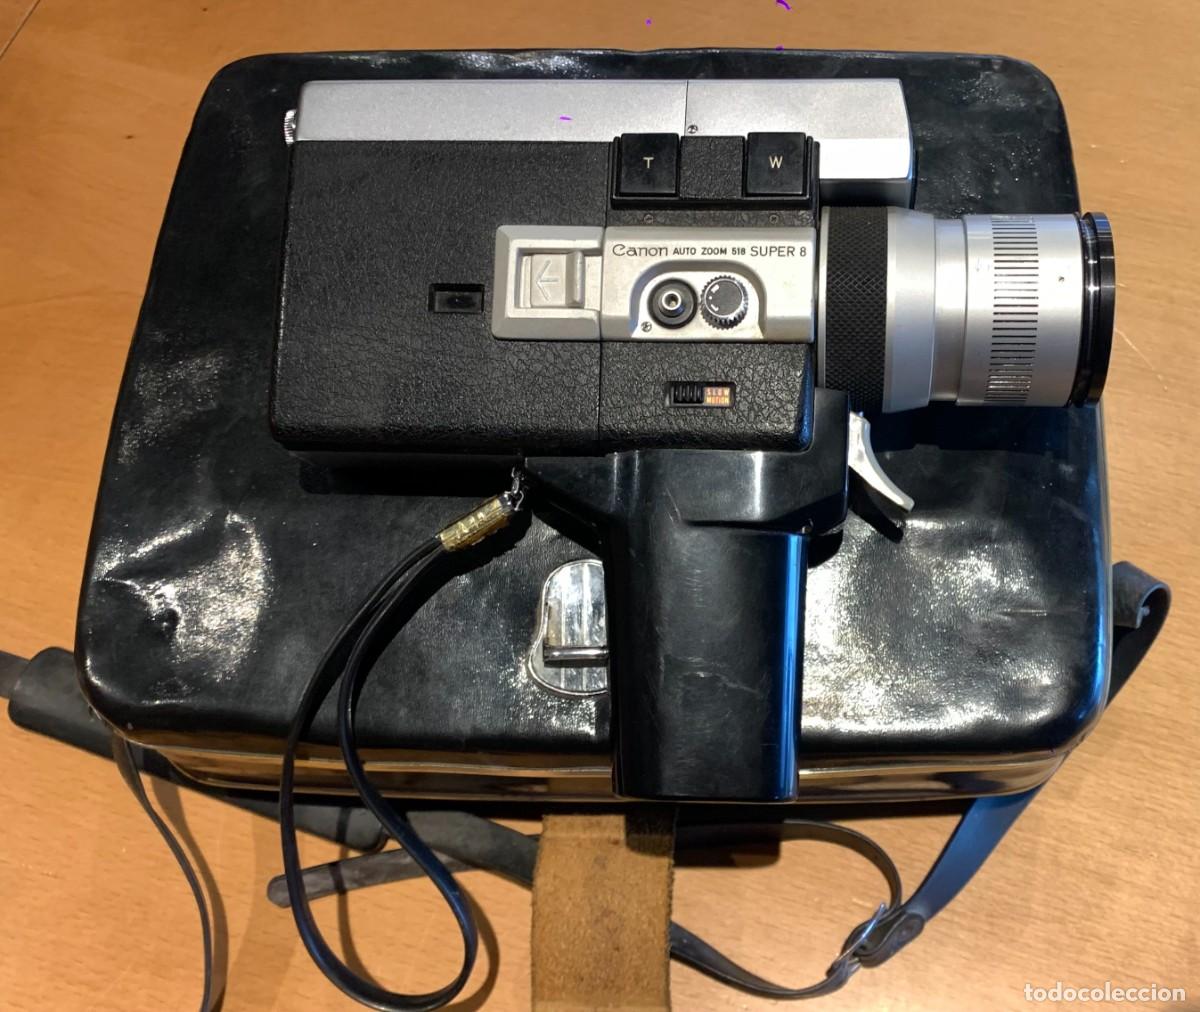 canon auto zoom 518 sv super8 camara - Buy Super 8 mm film cameras